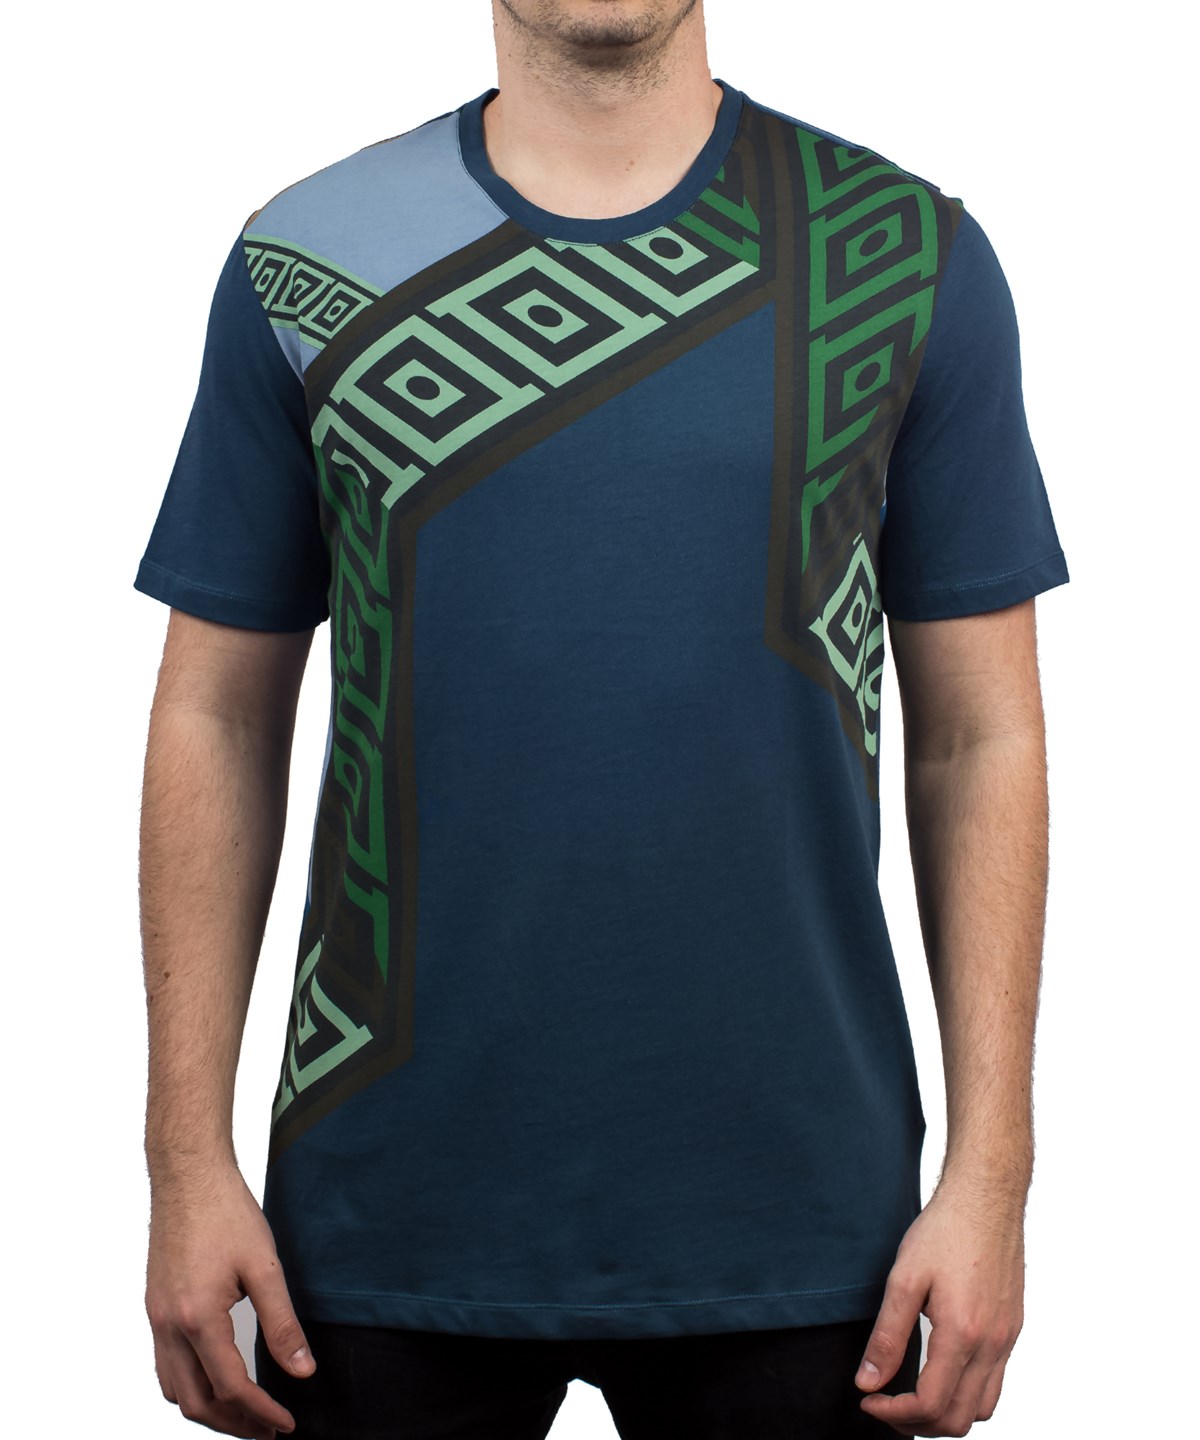 versace pattern t shirt